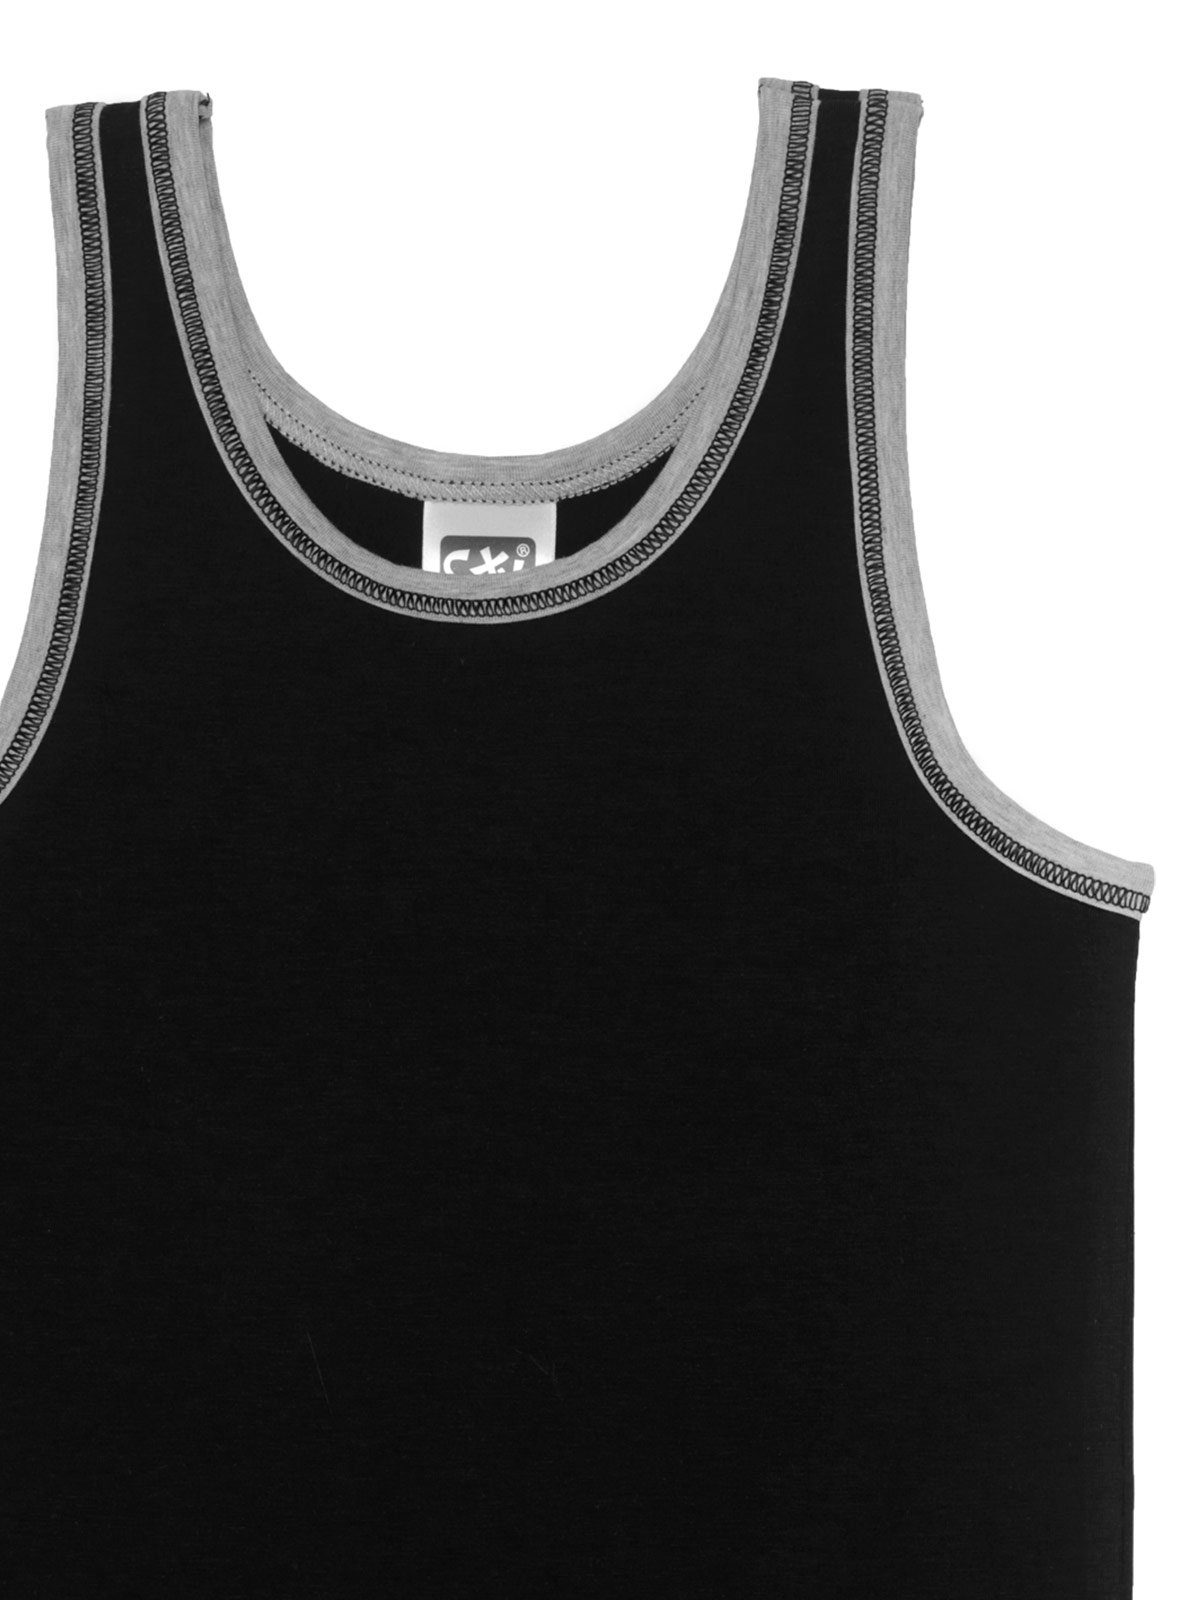 Knaben 3-St) Unterhemd Kids Jersey for Single Pack 3er Sweety - Unterhemd (Packung, schwarz